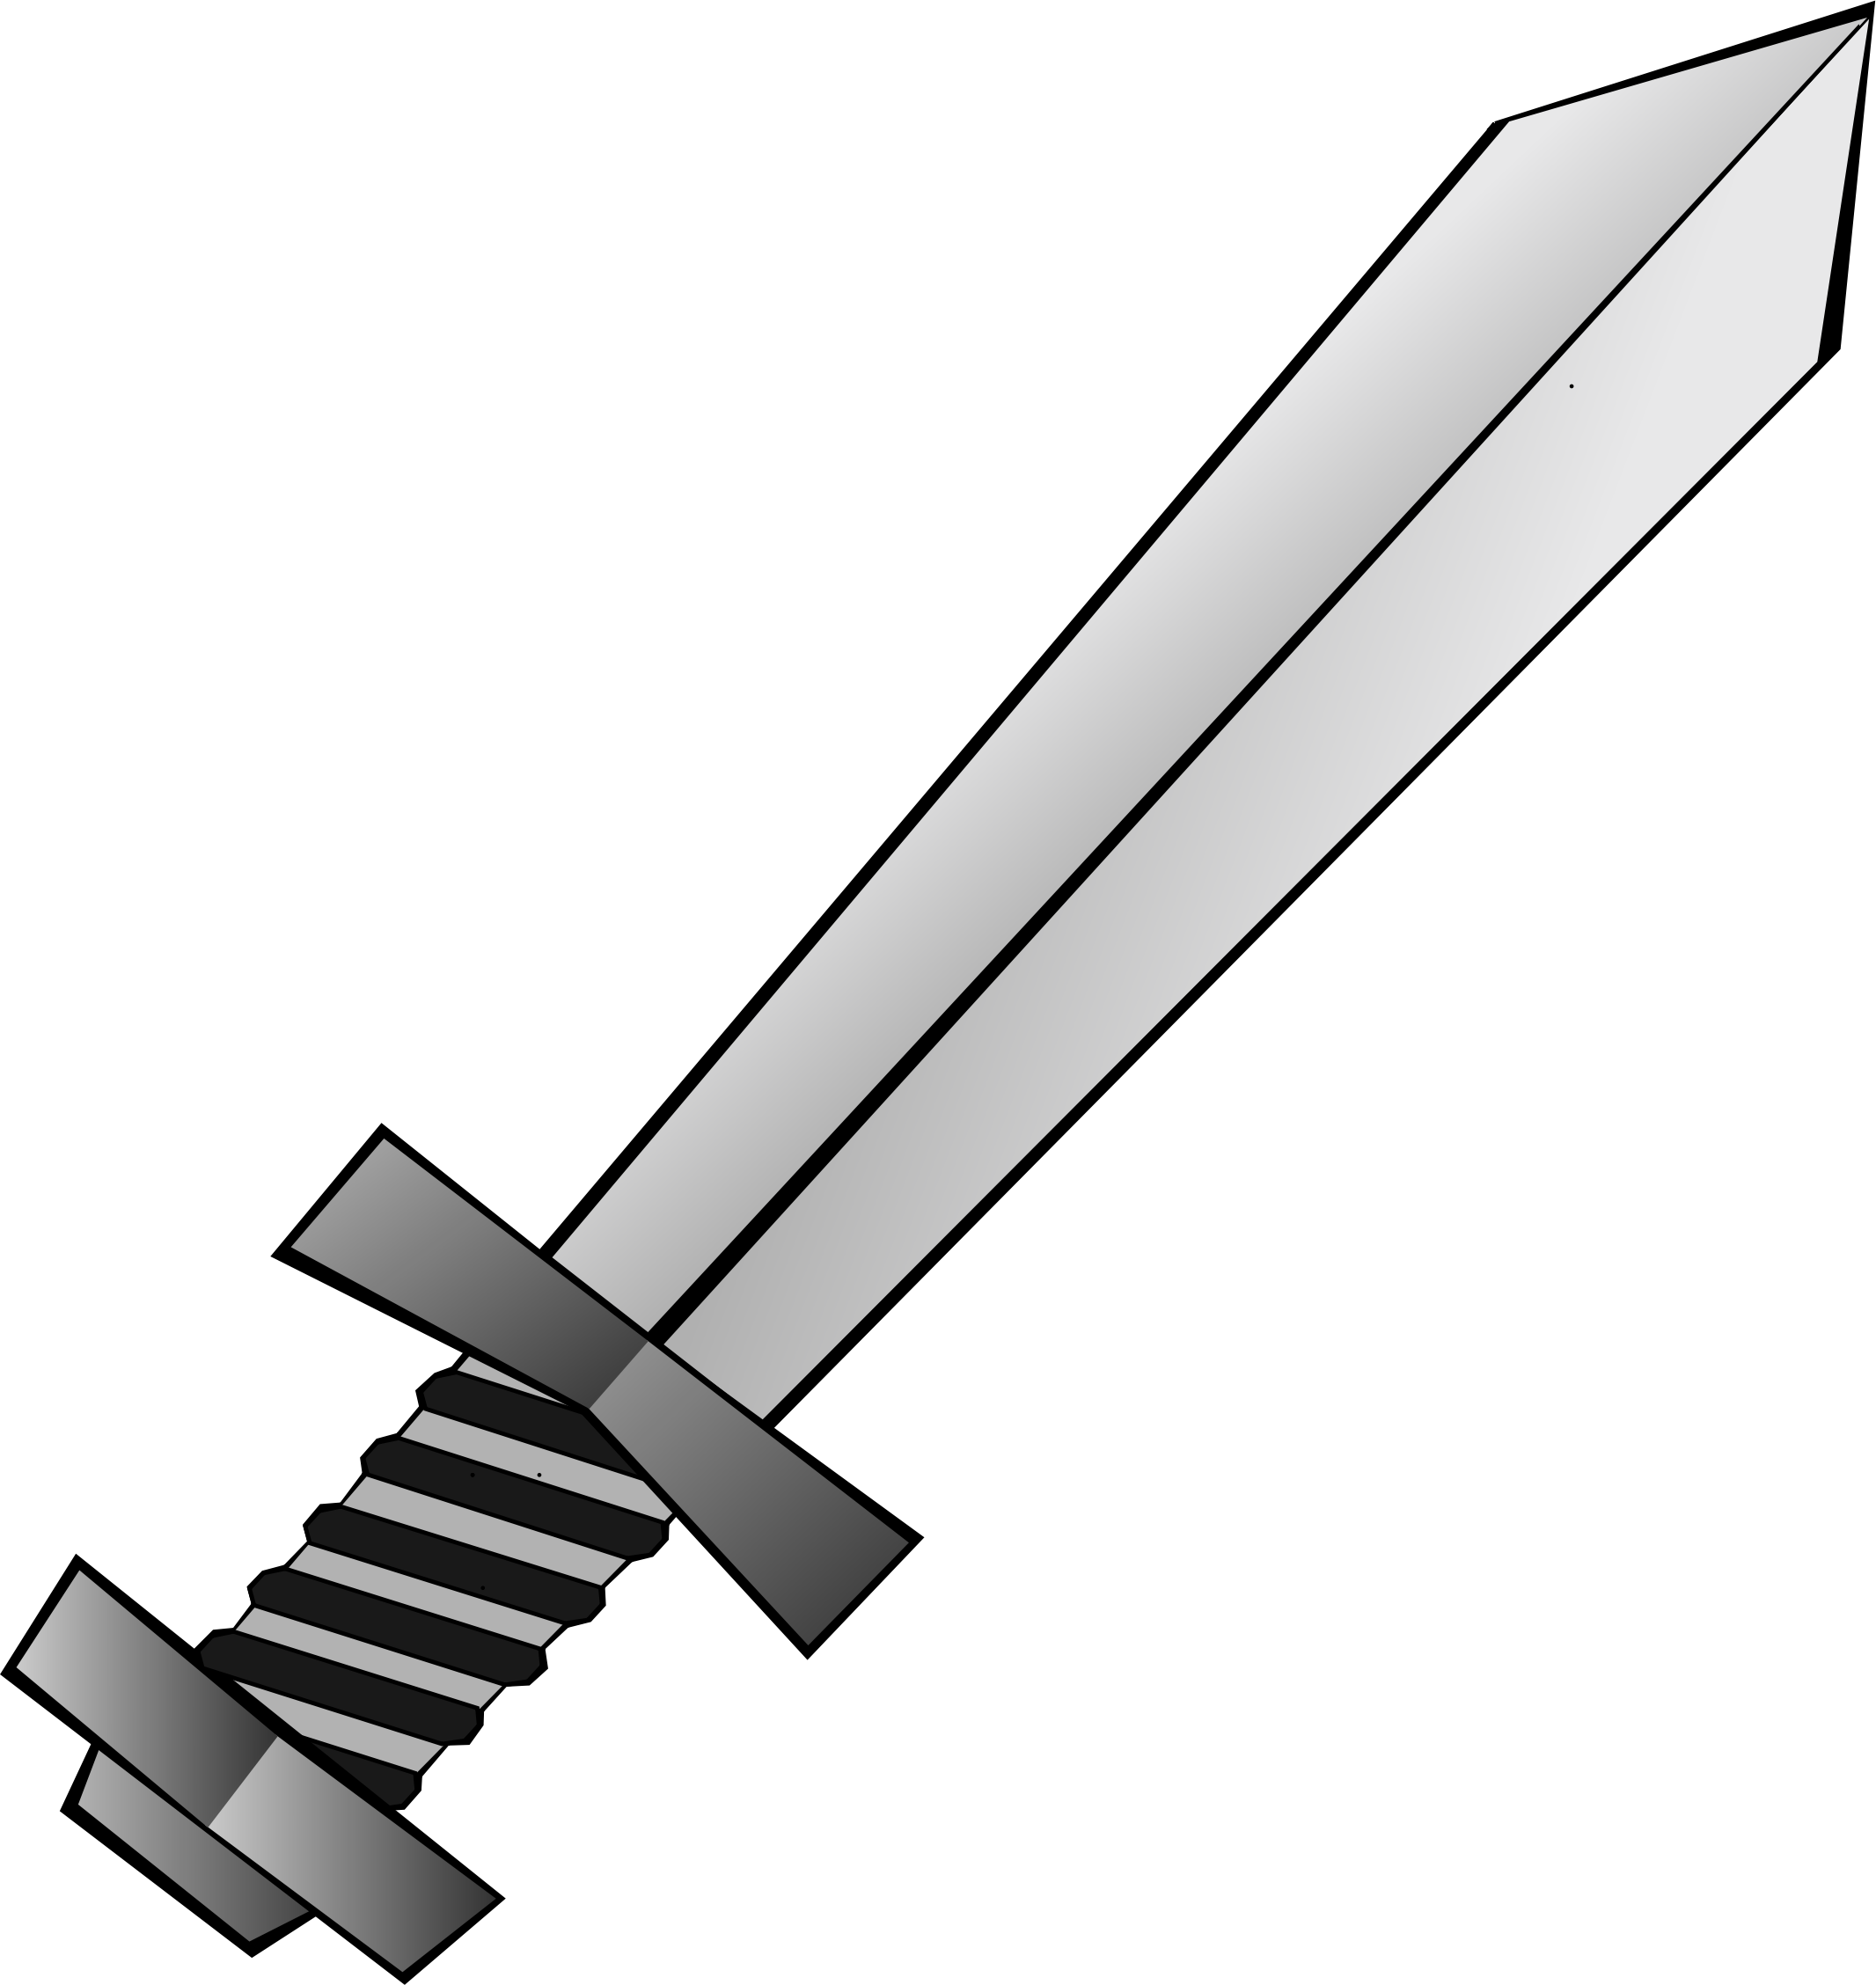 Clip art sword - ClipartFest